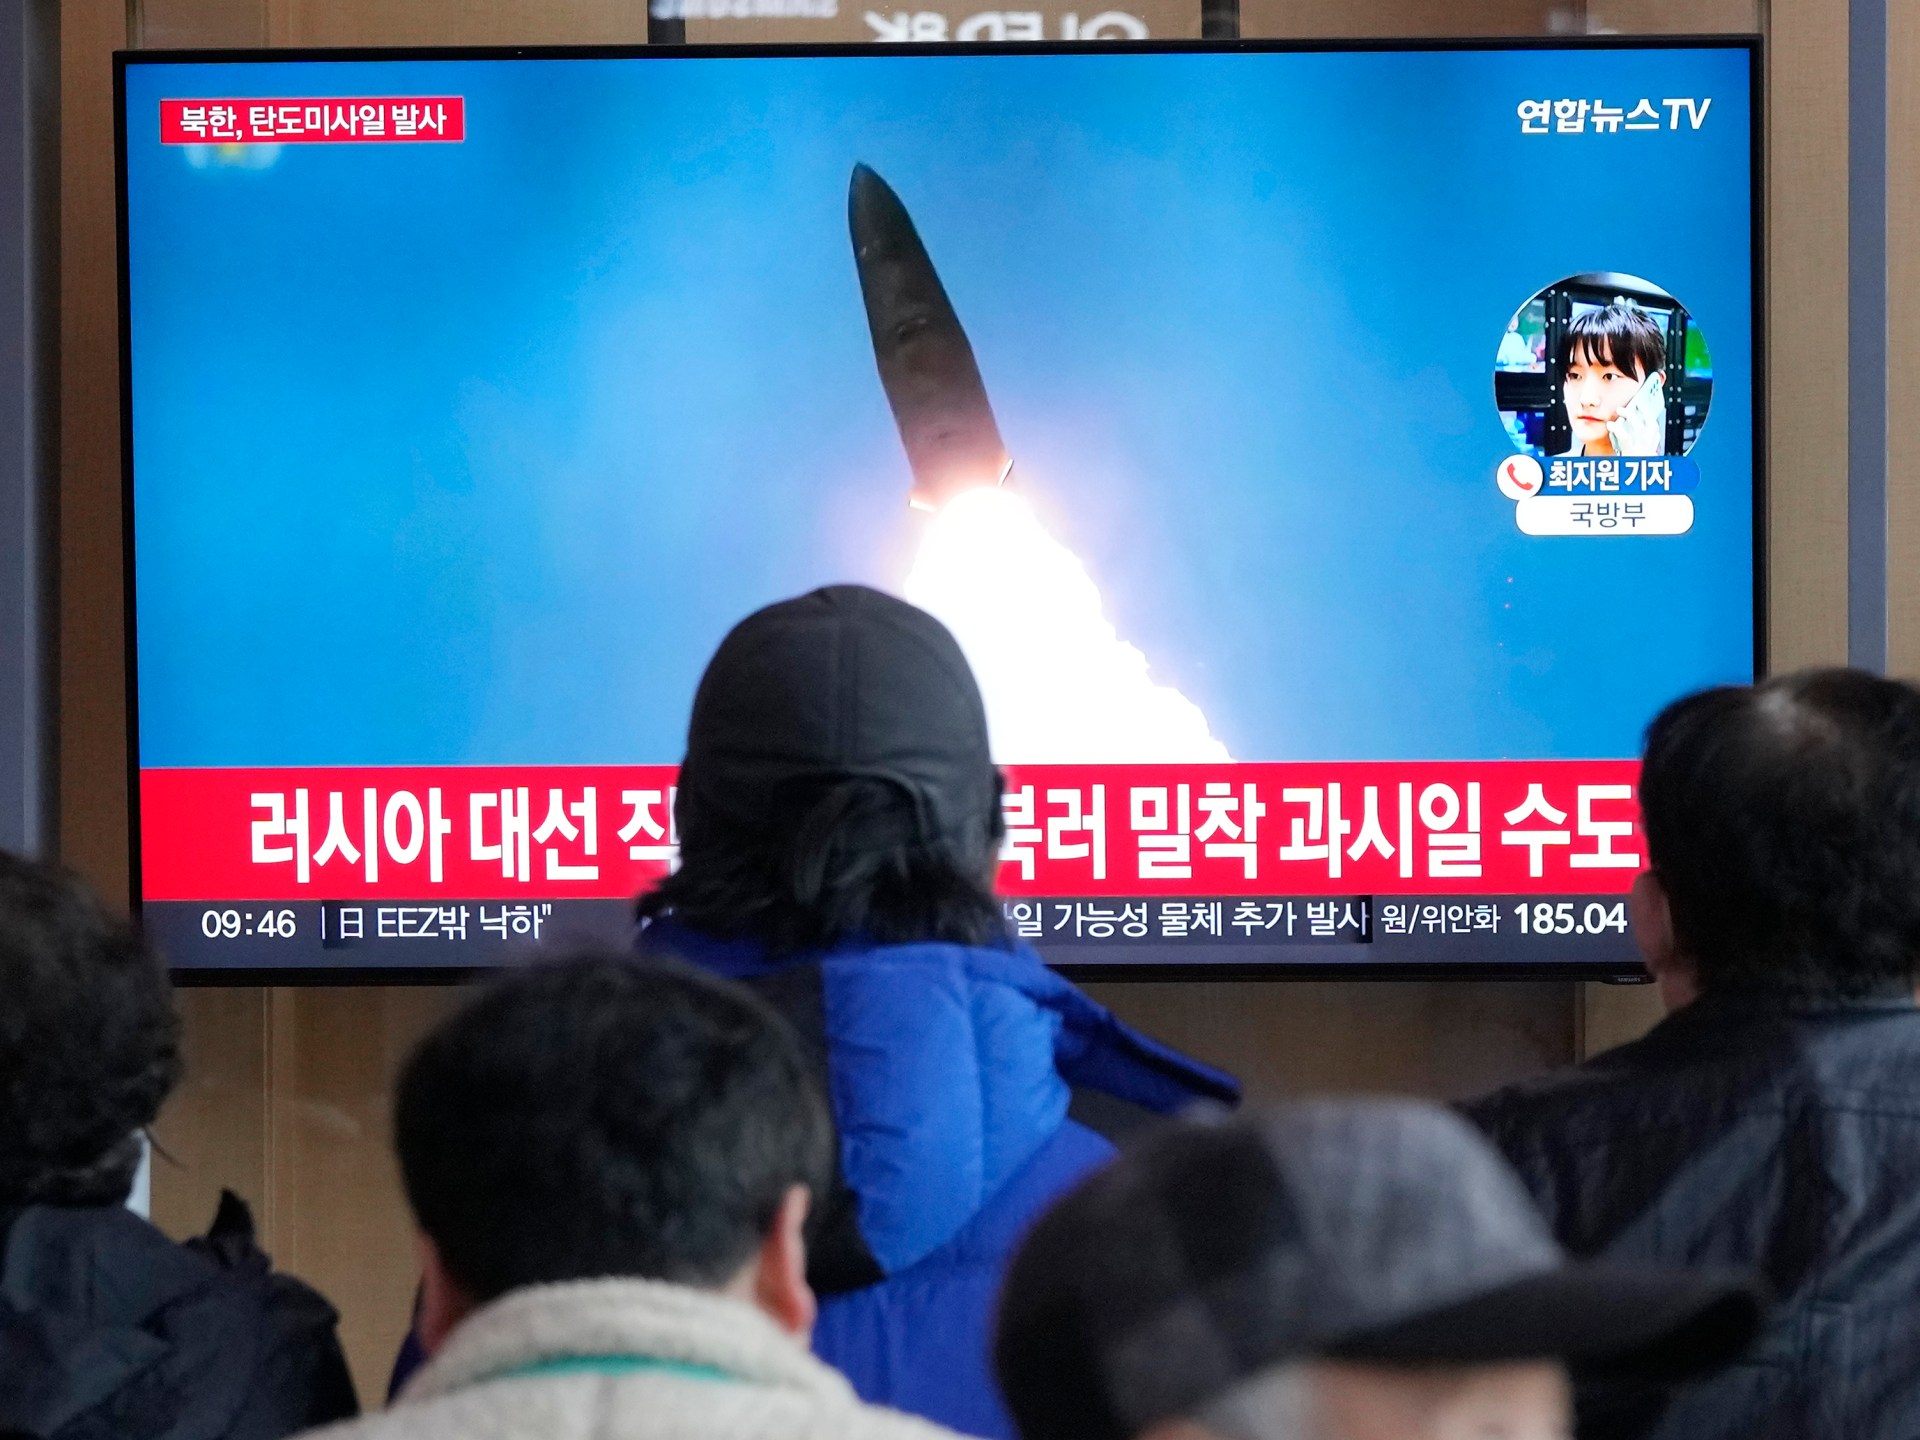 North Korea fires ballistic missiles as Blinken visits Seoul | South China Sea News